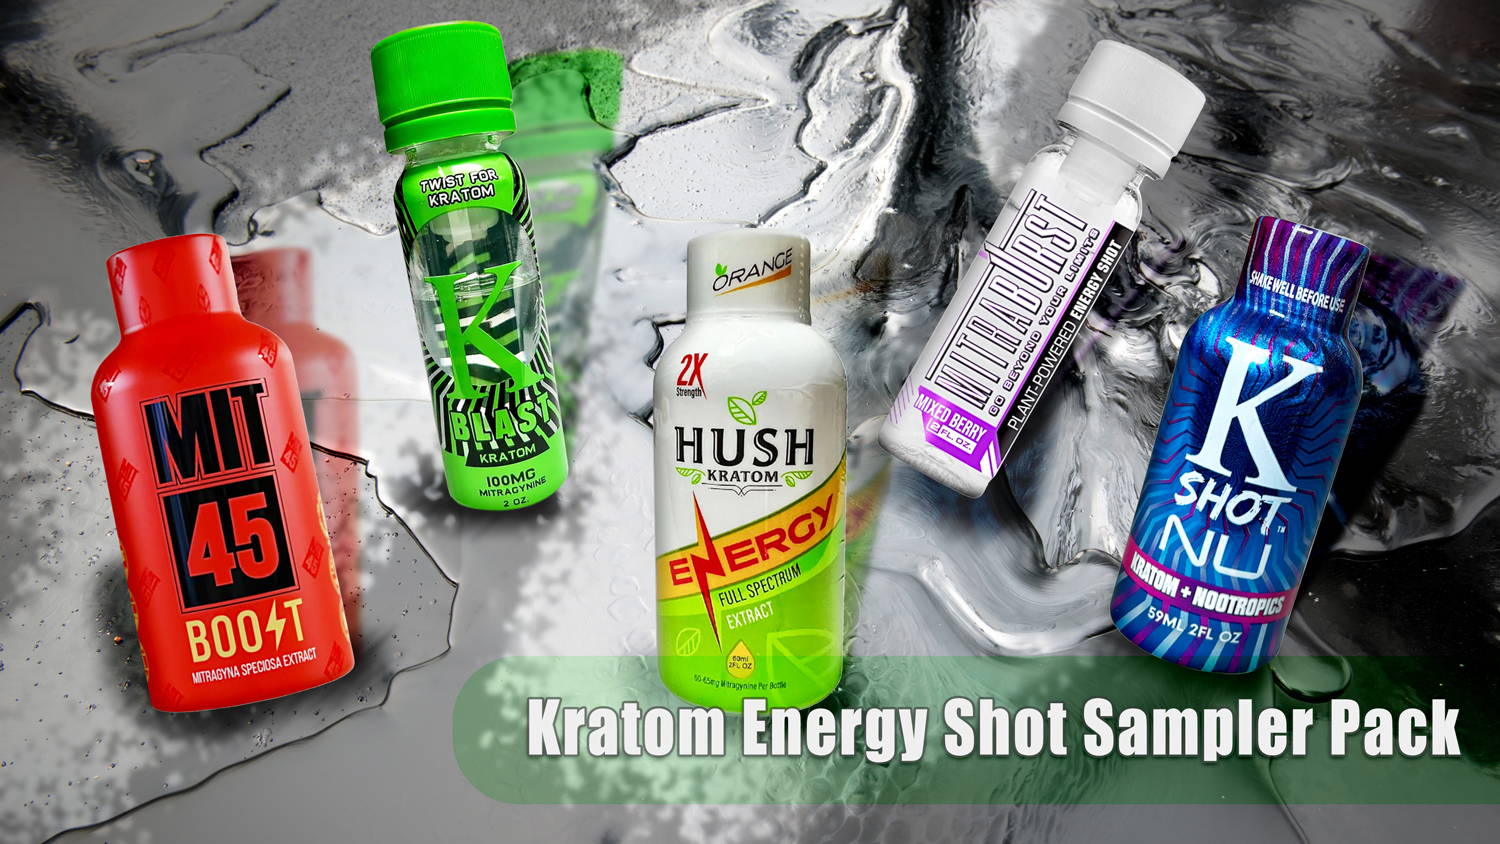 K Blast, Mitraburst, K Shot NU, Hush Energy, MIT 45 Boost Energy Shots Banner